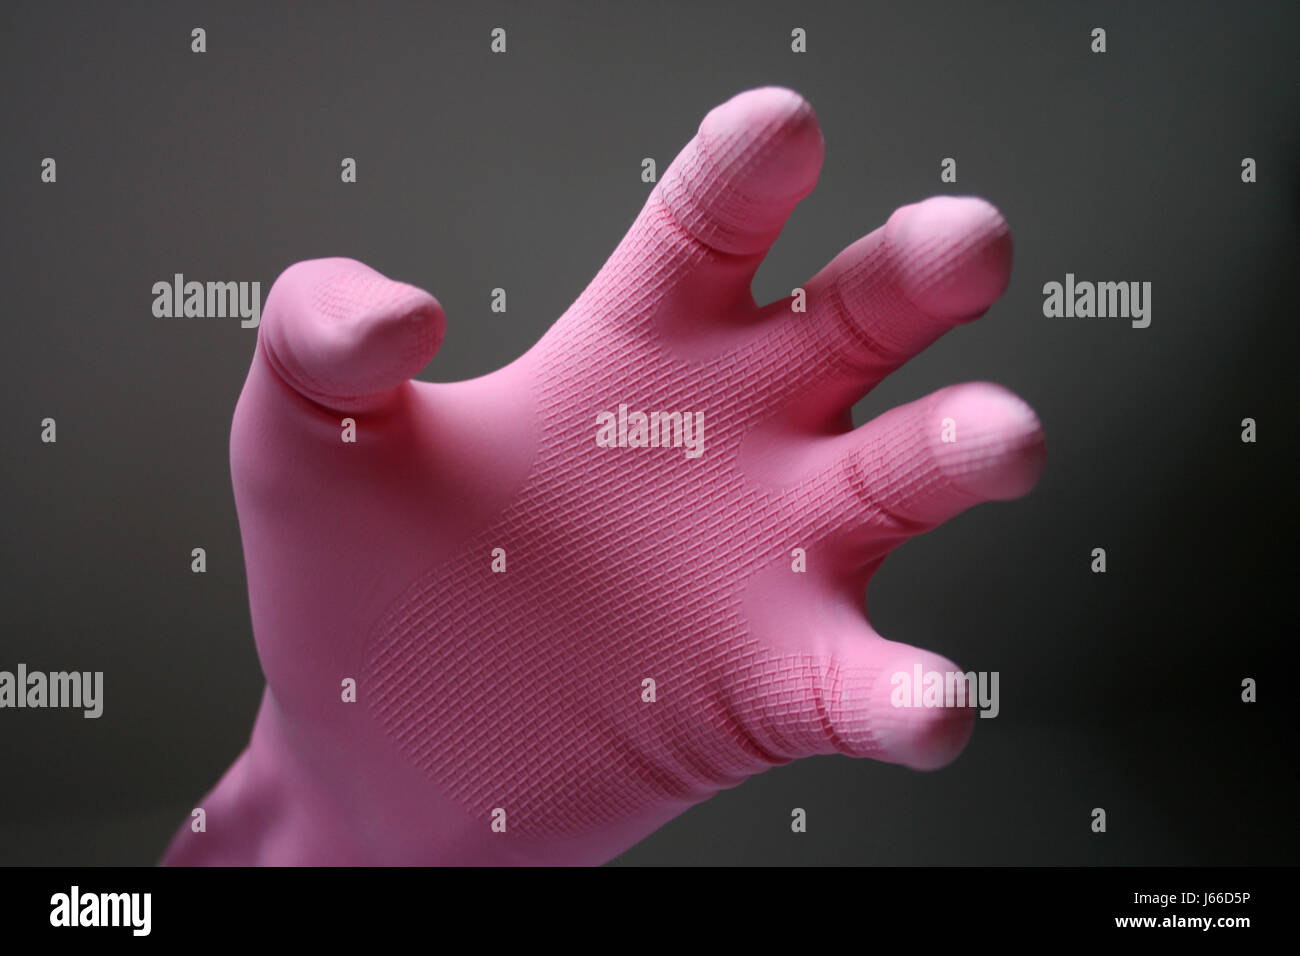 Handschuh Furbisch Kautschuk rosa Finger Haushalt zu schützen Schutz Griff Fang Stockfoto